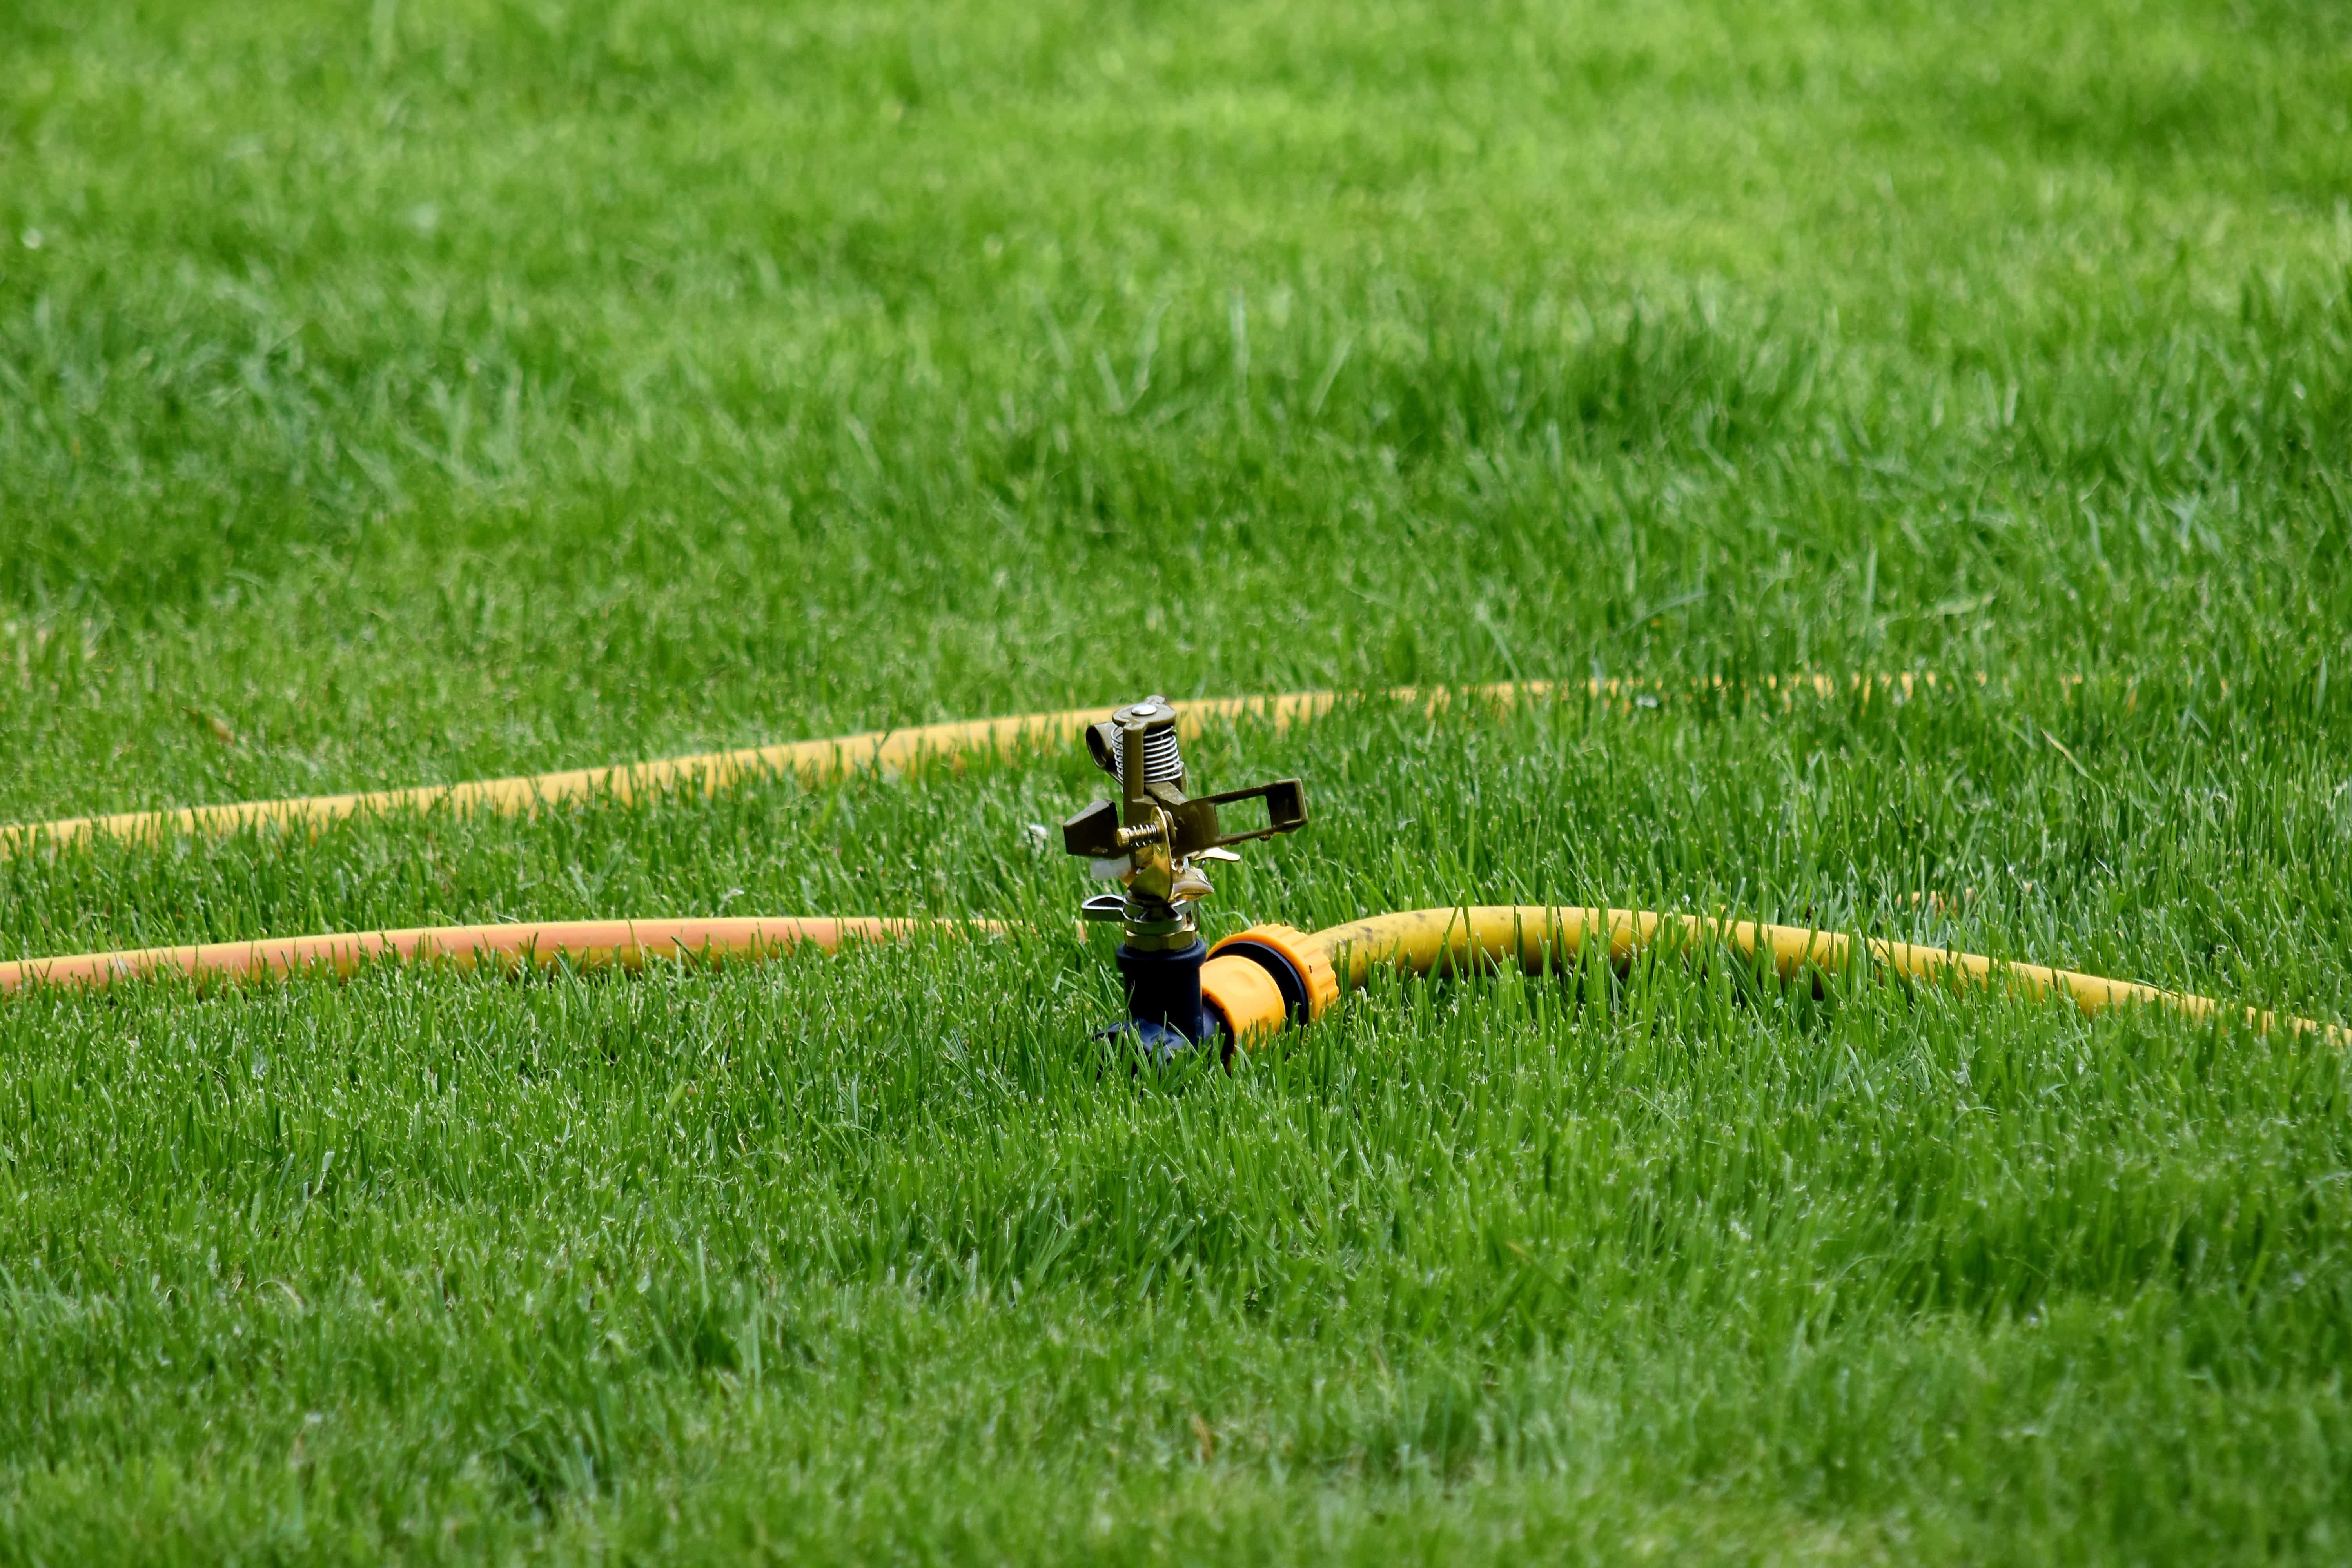 Free picture: faucet, green grass, hose, irrigation, mechanism, grass, field, device, lawn, summer